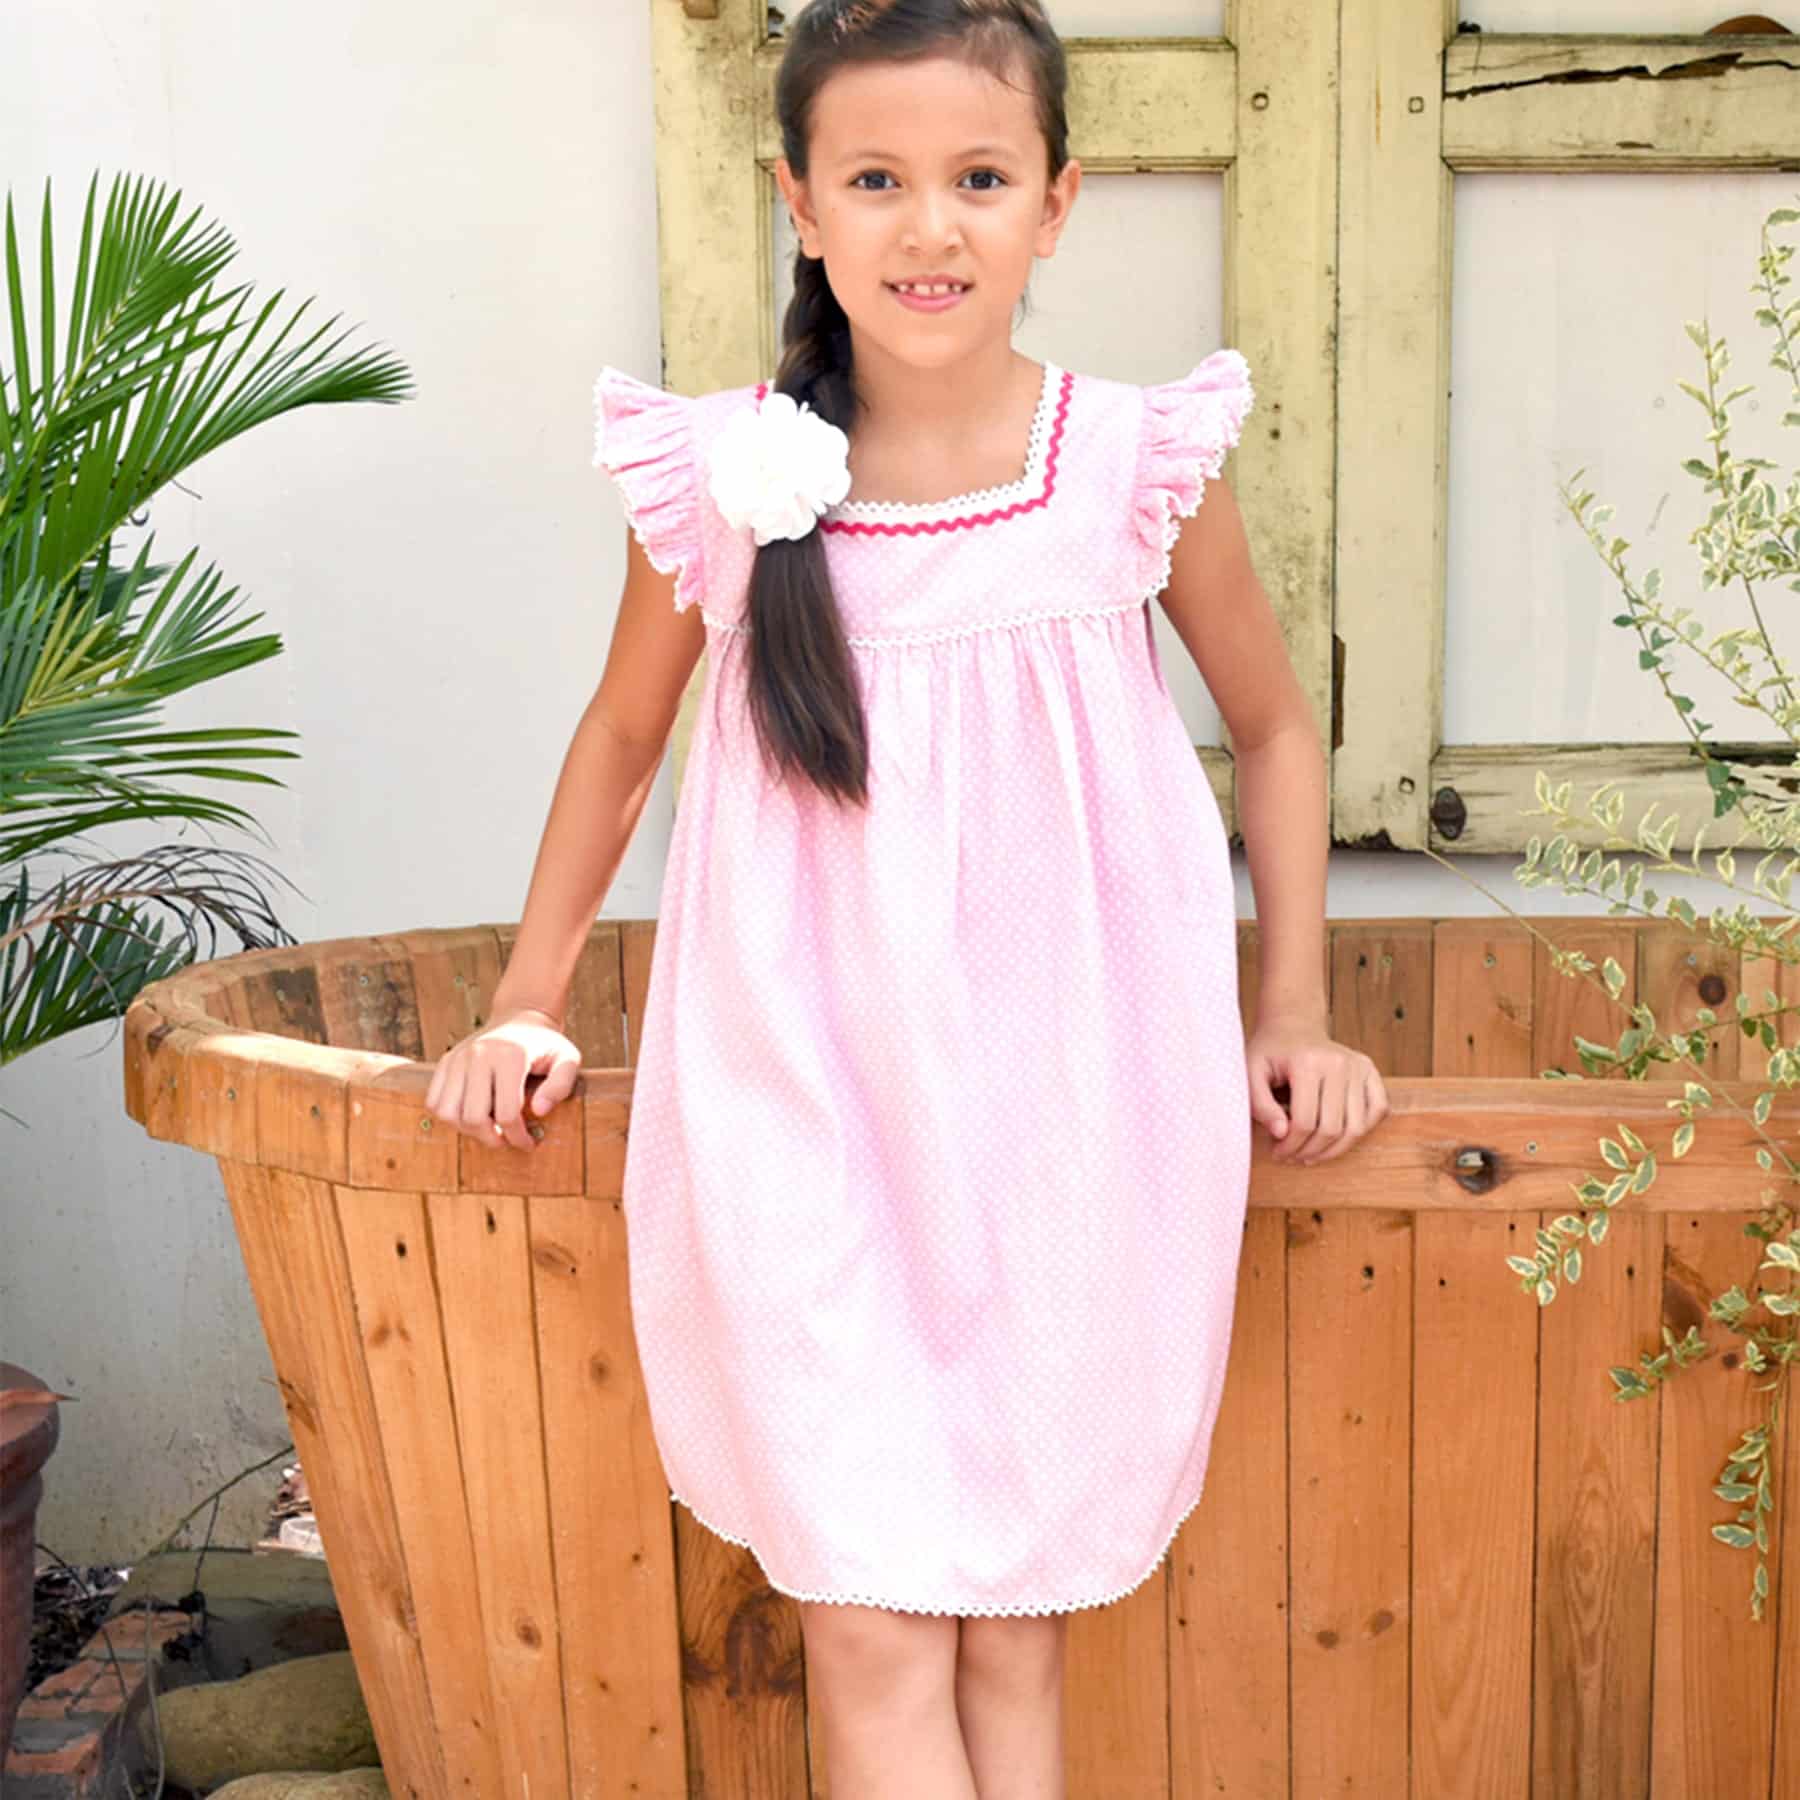 Loose pink summer dress with polka dots and ruffles